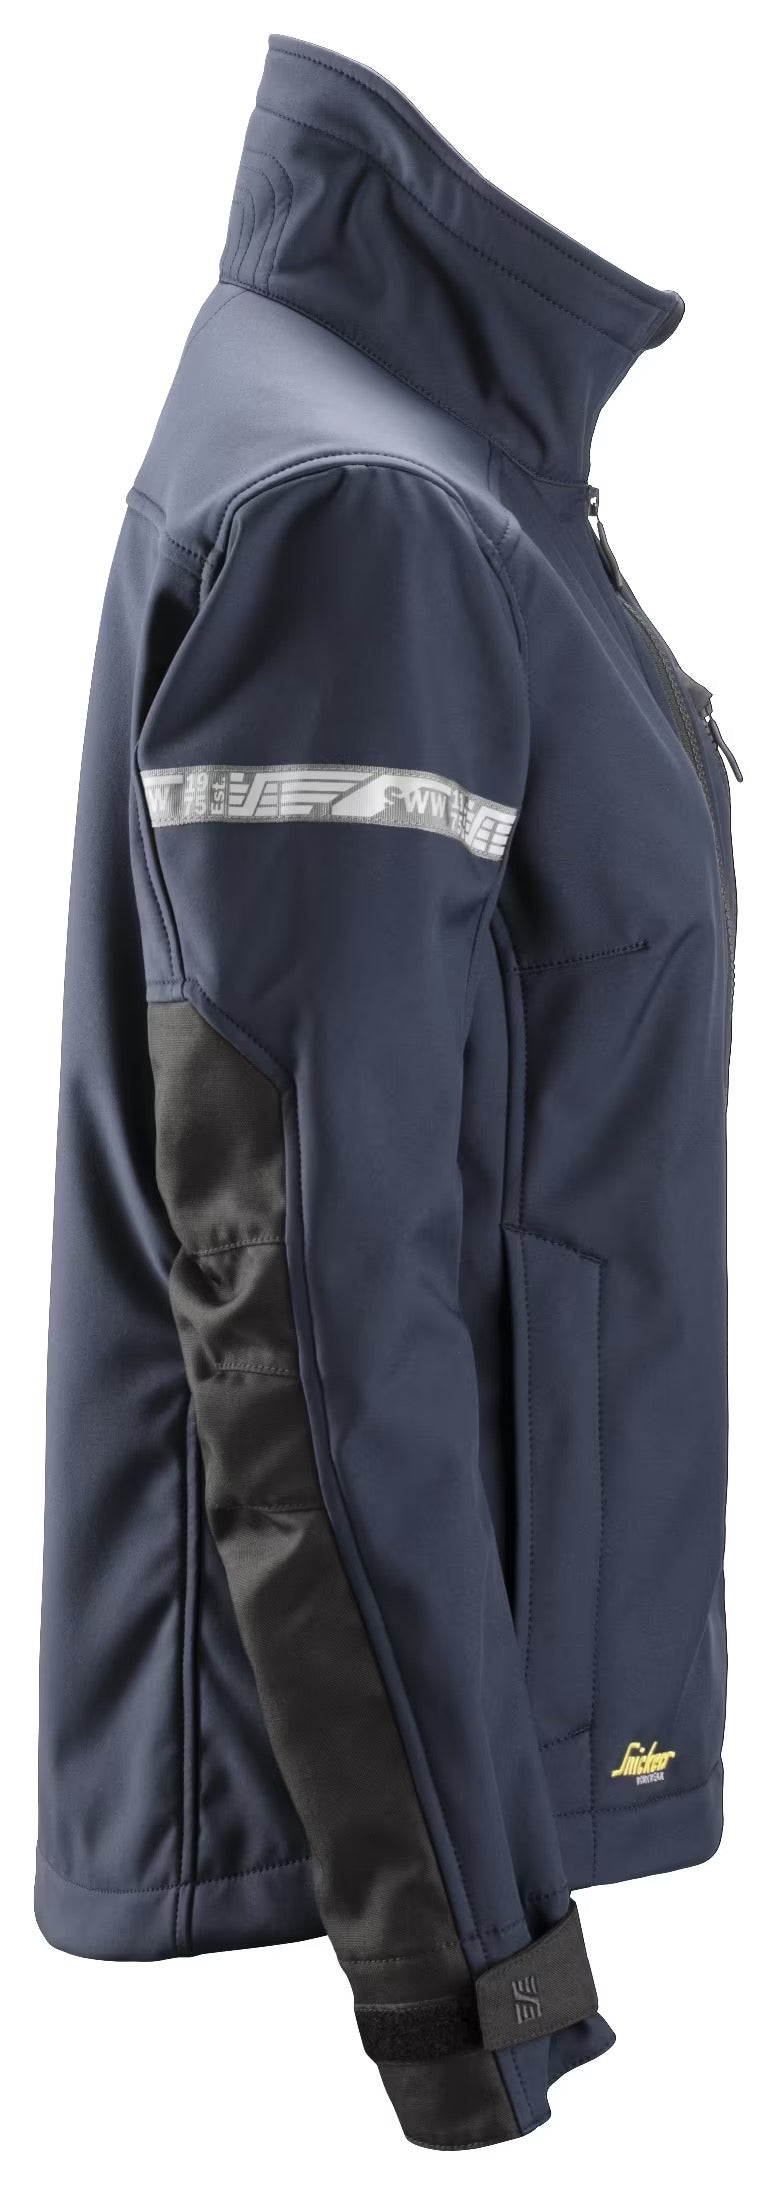 Snickers Workwear 1207 AllroundWork Women's Softshell Jacket - Navy/Black